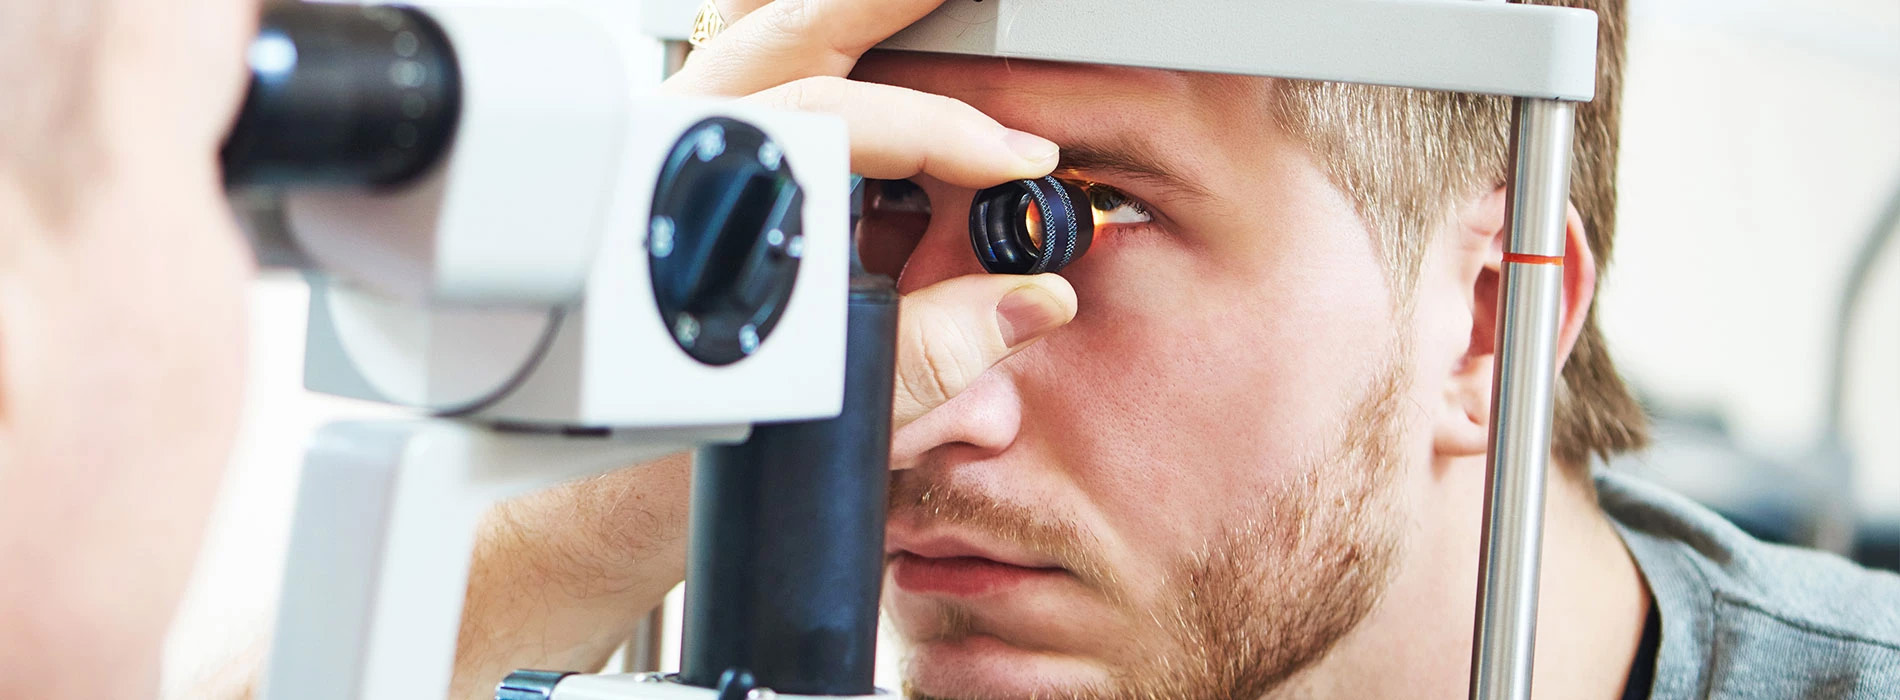 Gardens Vision Boutique | Diabetic Eye Exams, Surgery Co-Management and Glaucoma Diagnosis